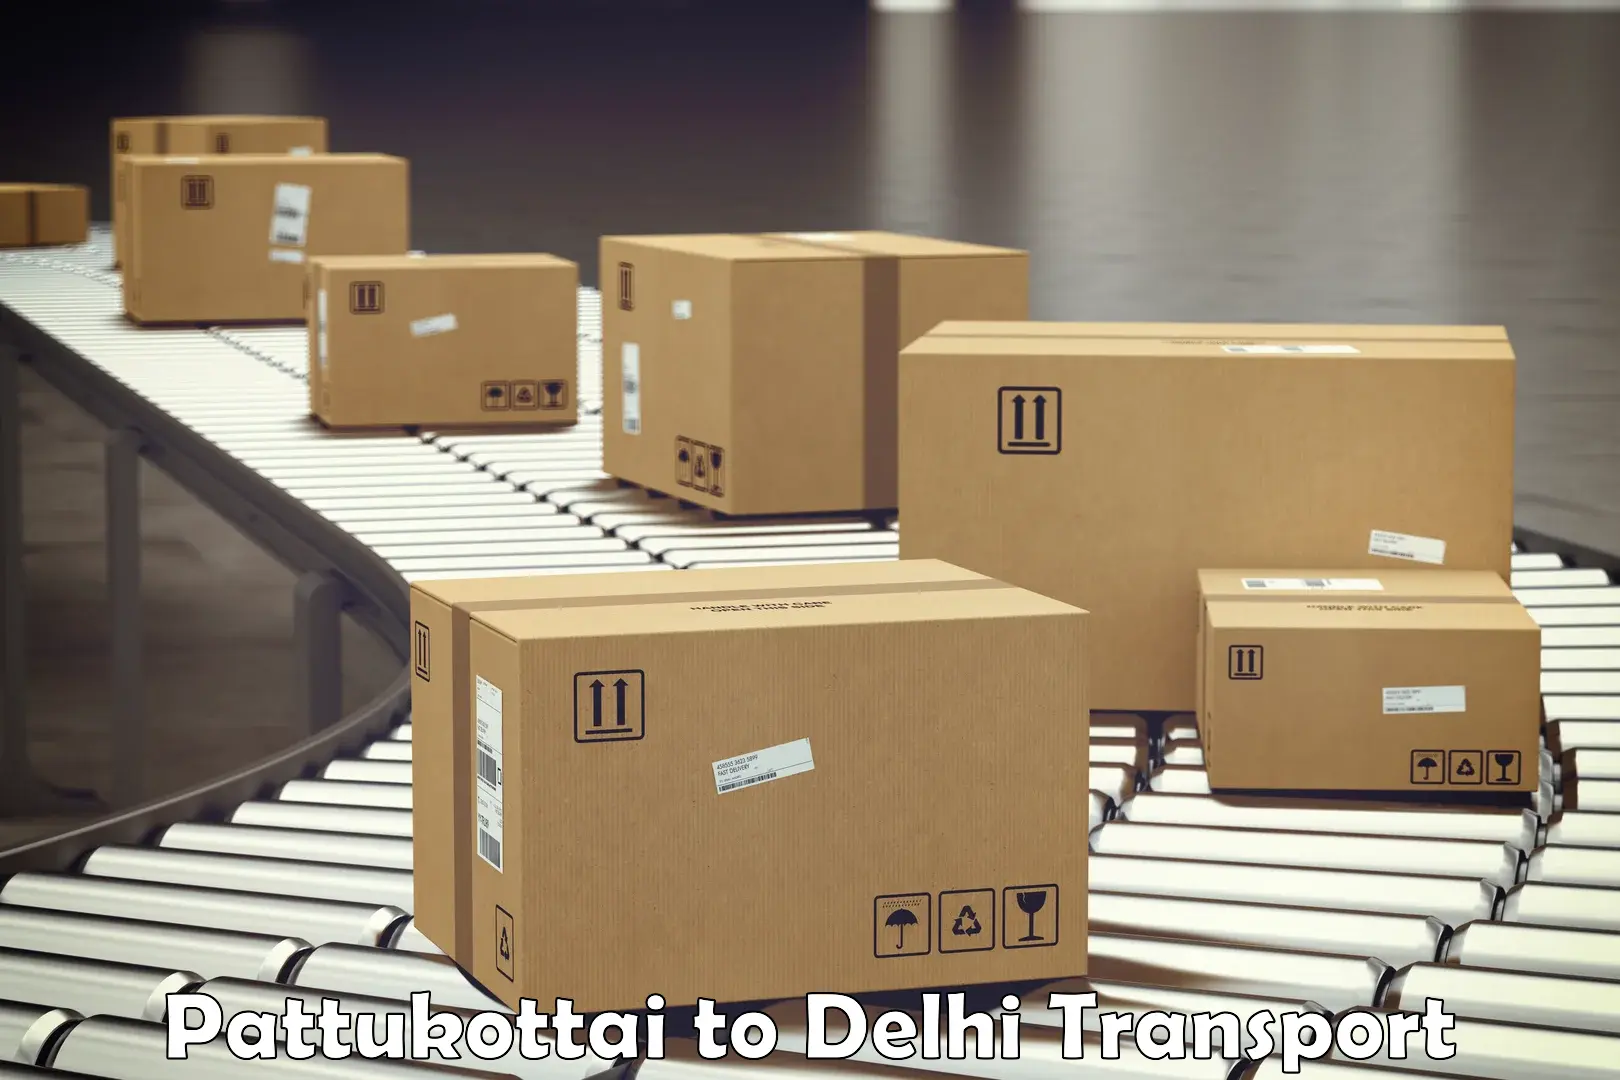 Shipping partner Pattukottai to IIT Delhi